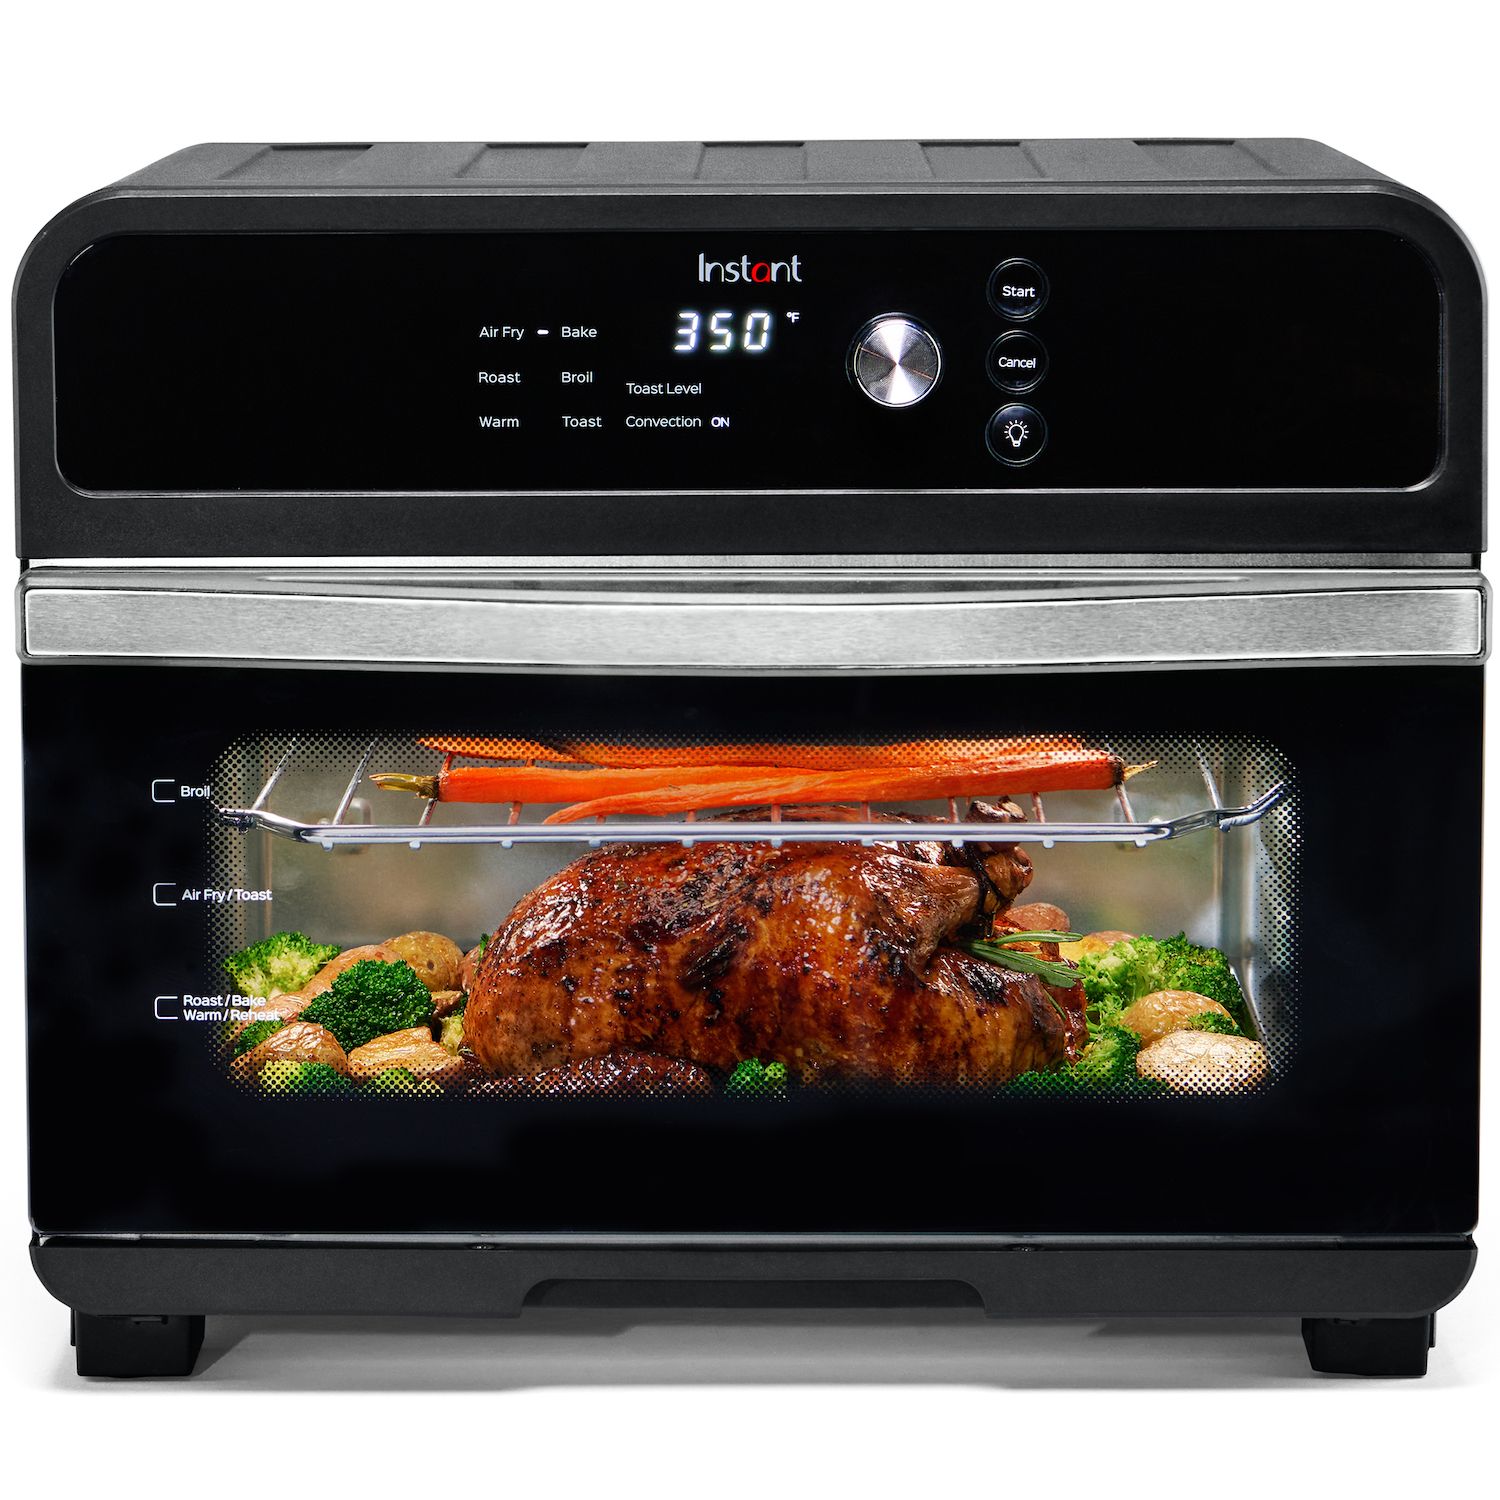 comfee Air Fryer Toaster Oven REVIEW! #primeday #airfryer baking pies  empanadas chicken 